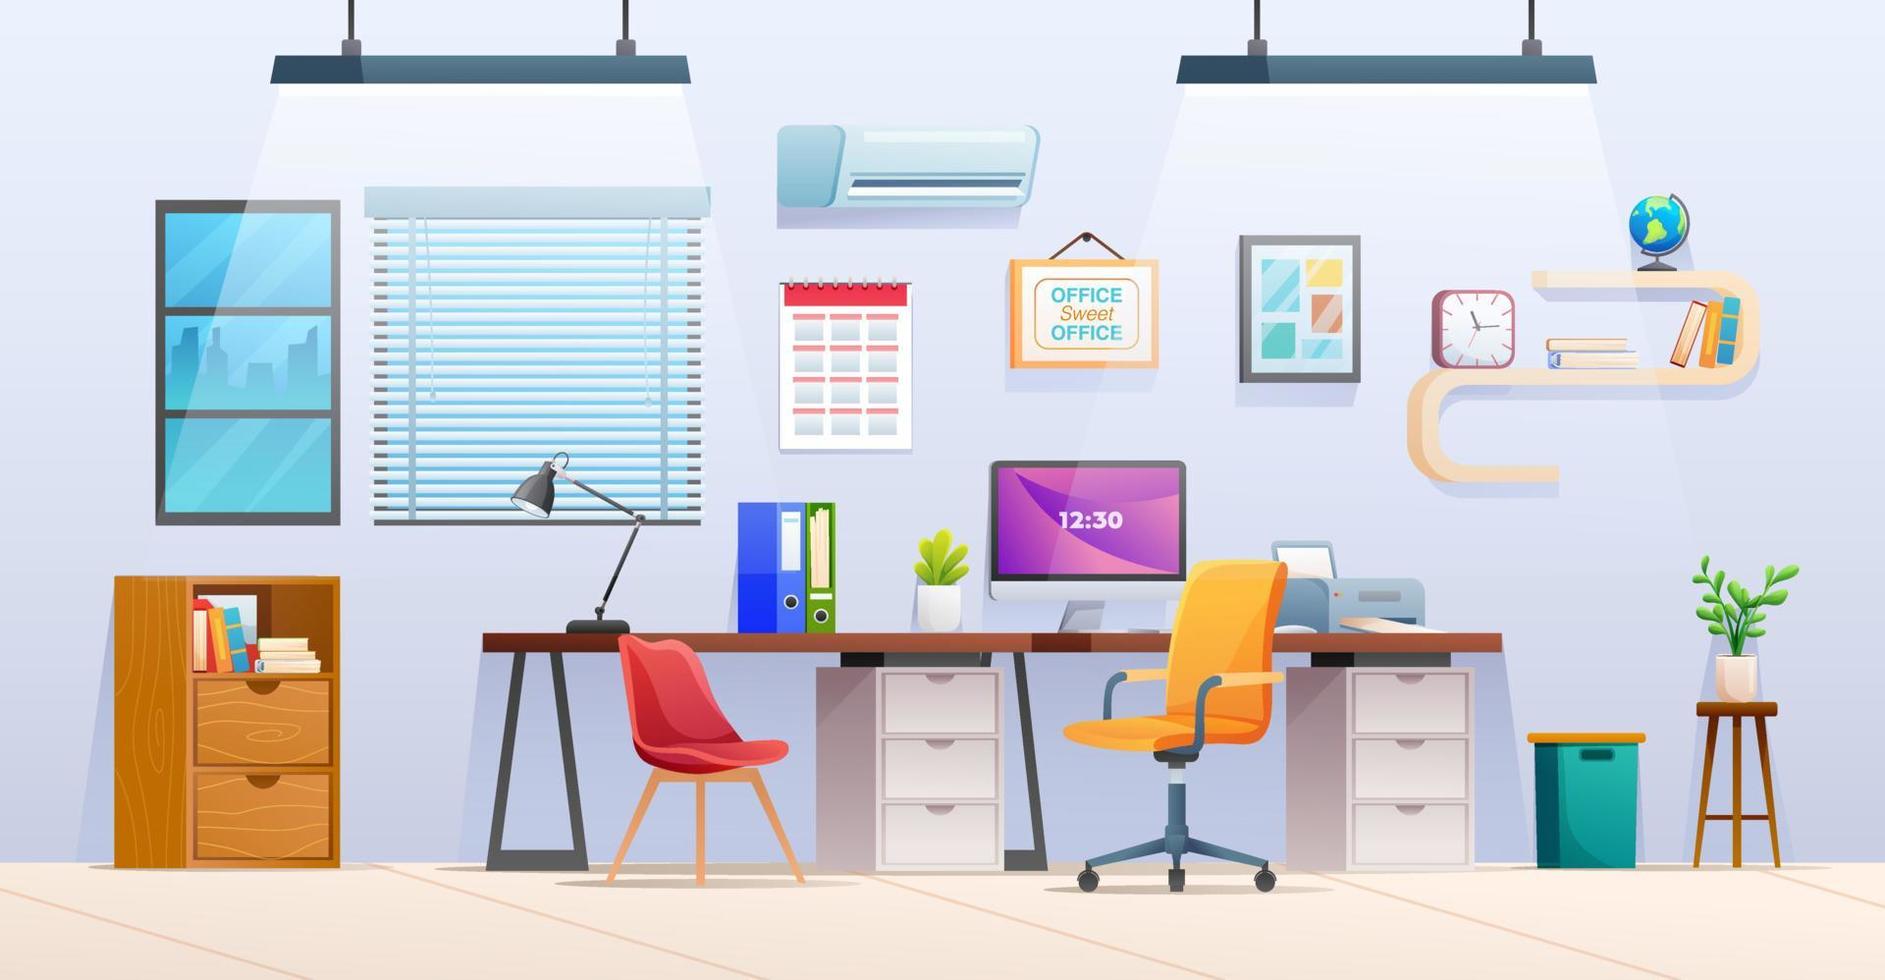 Office workstation interior design cartoon vector